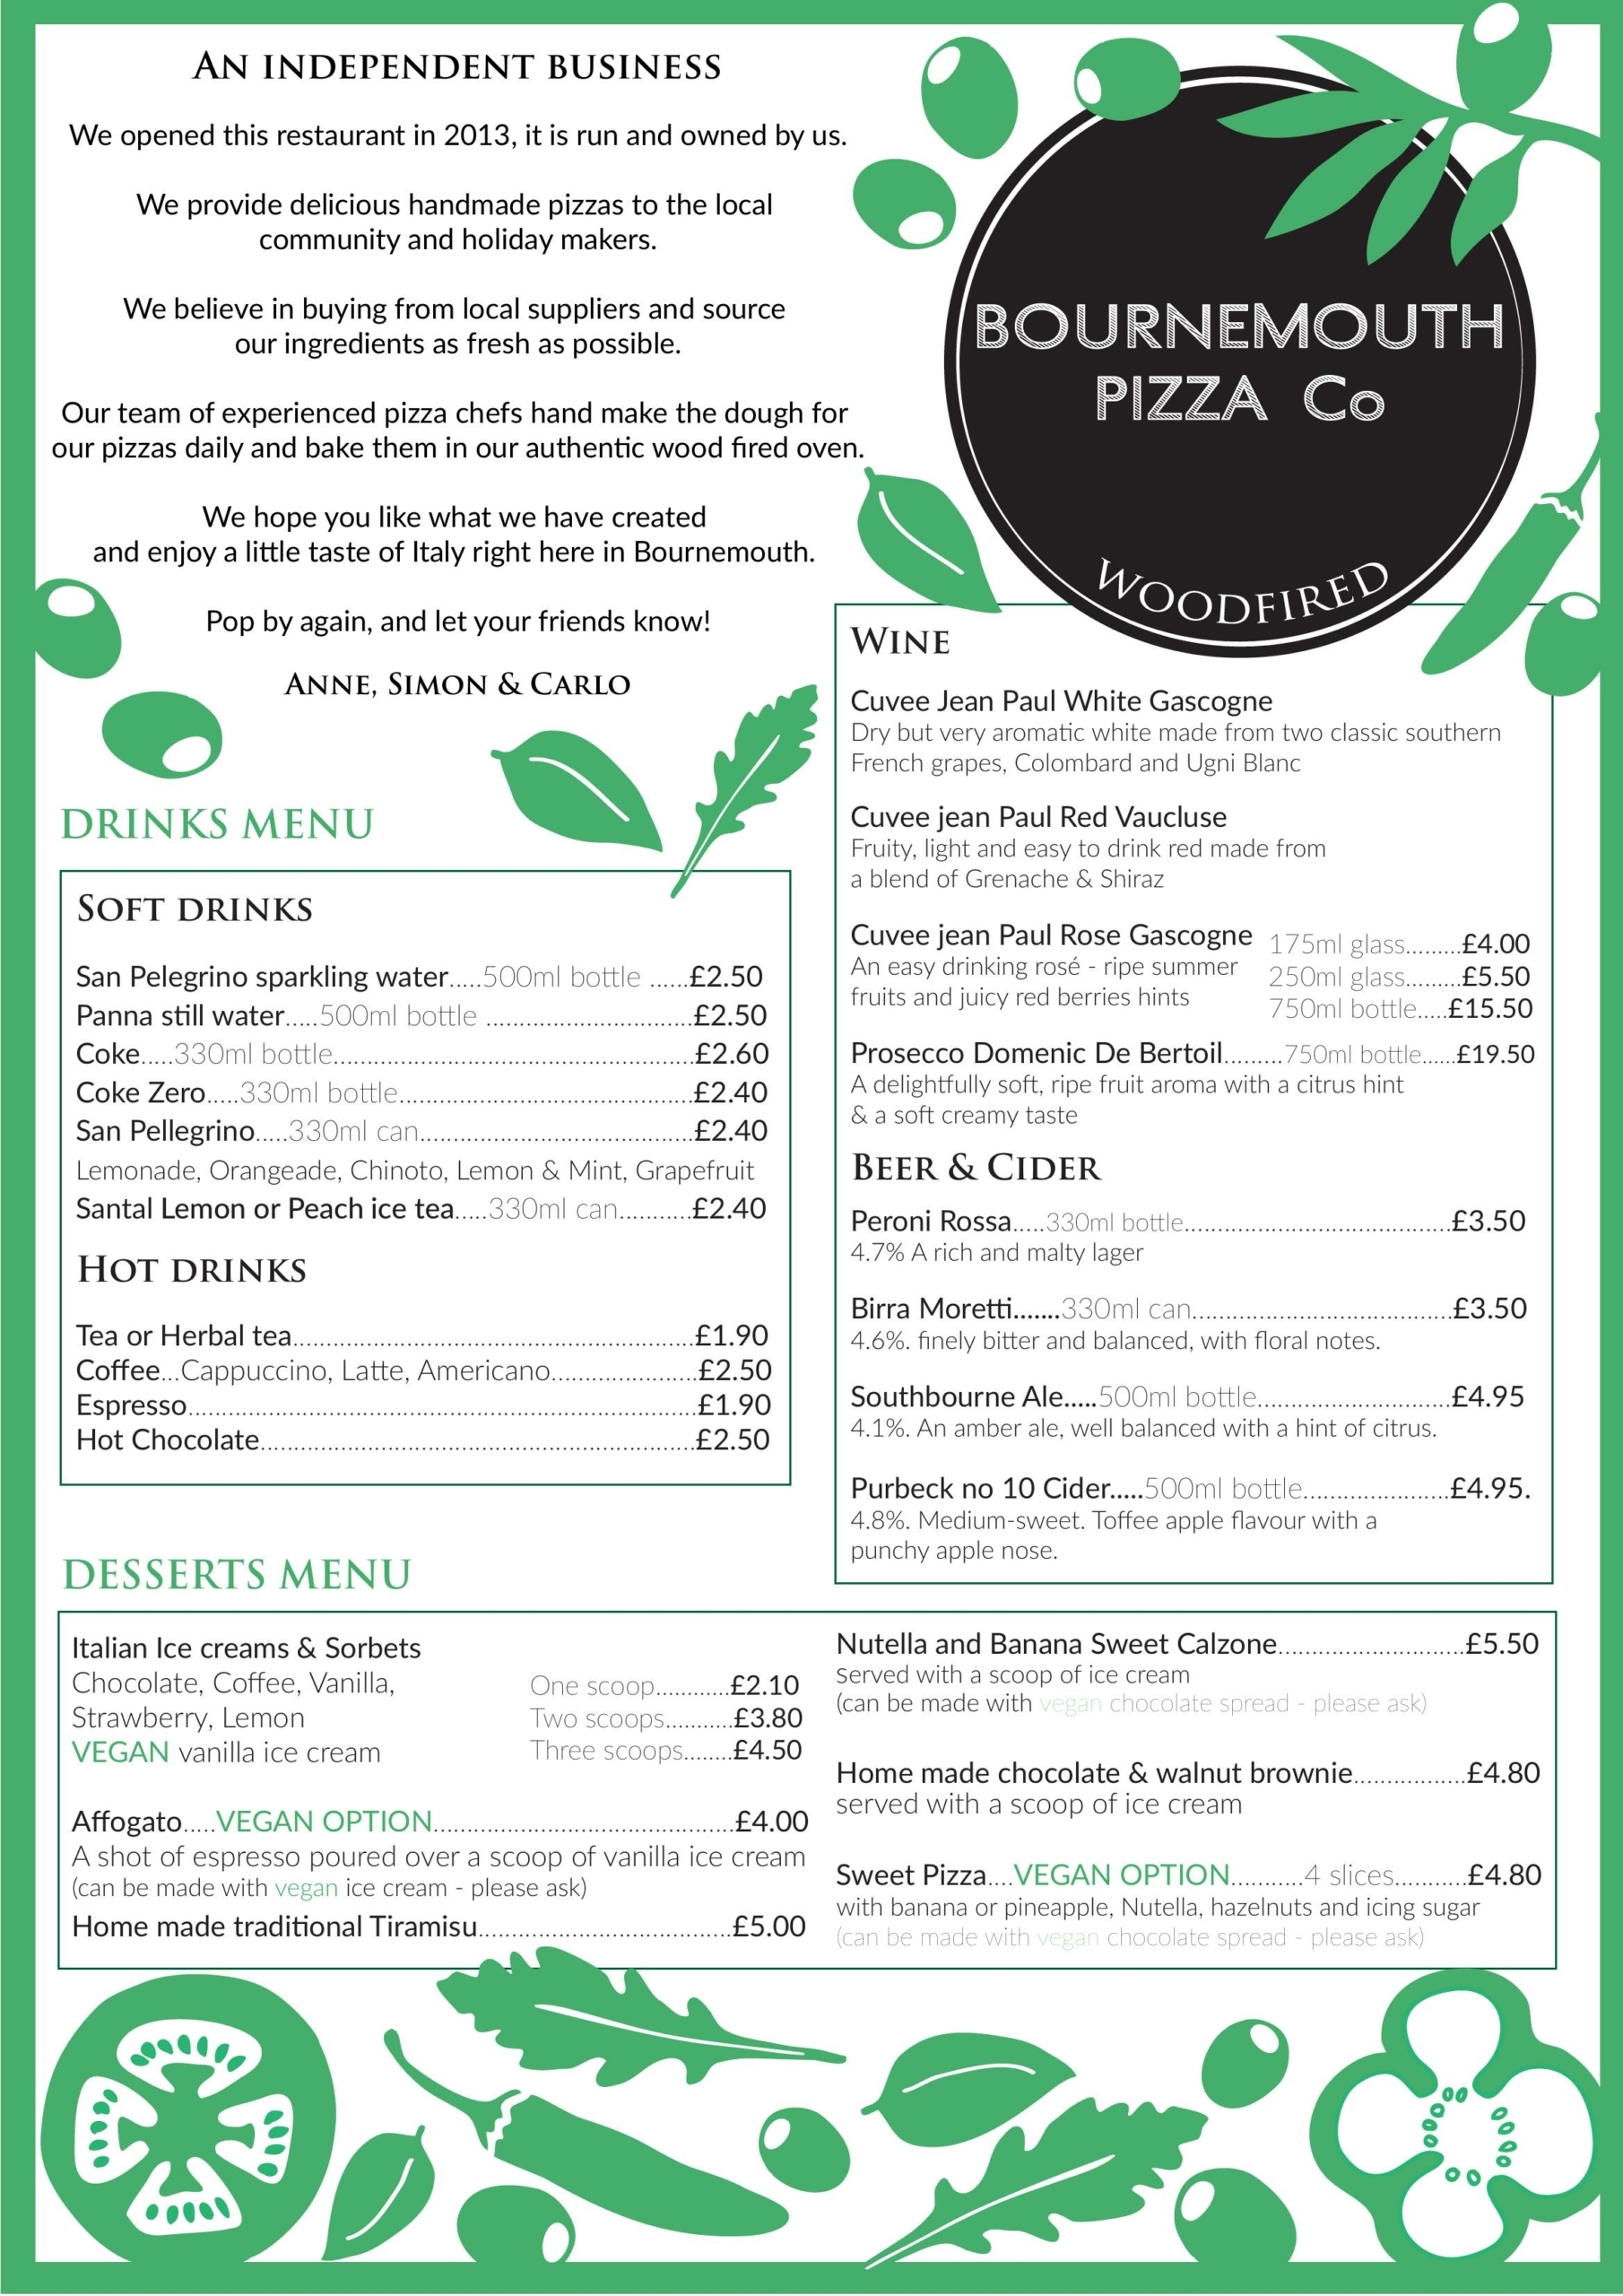 Bournemouth Pizza Co. - main menu